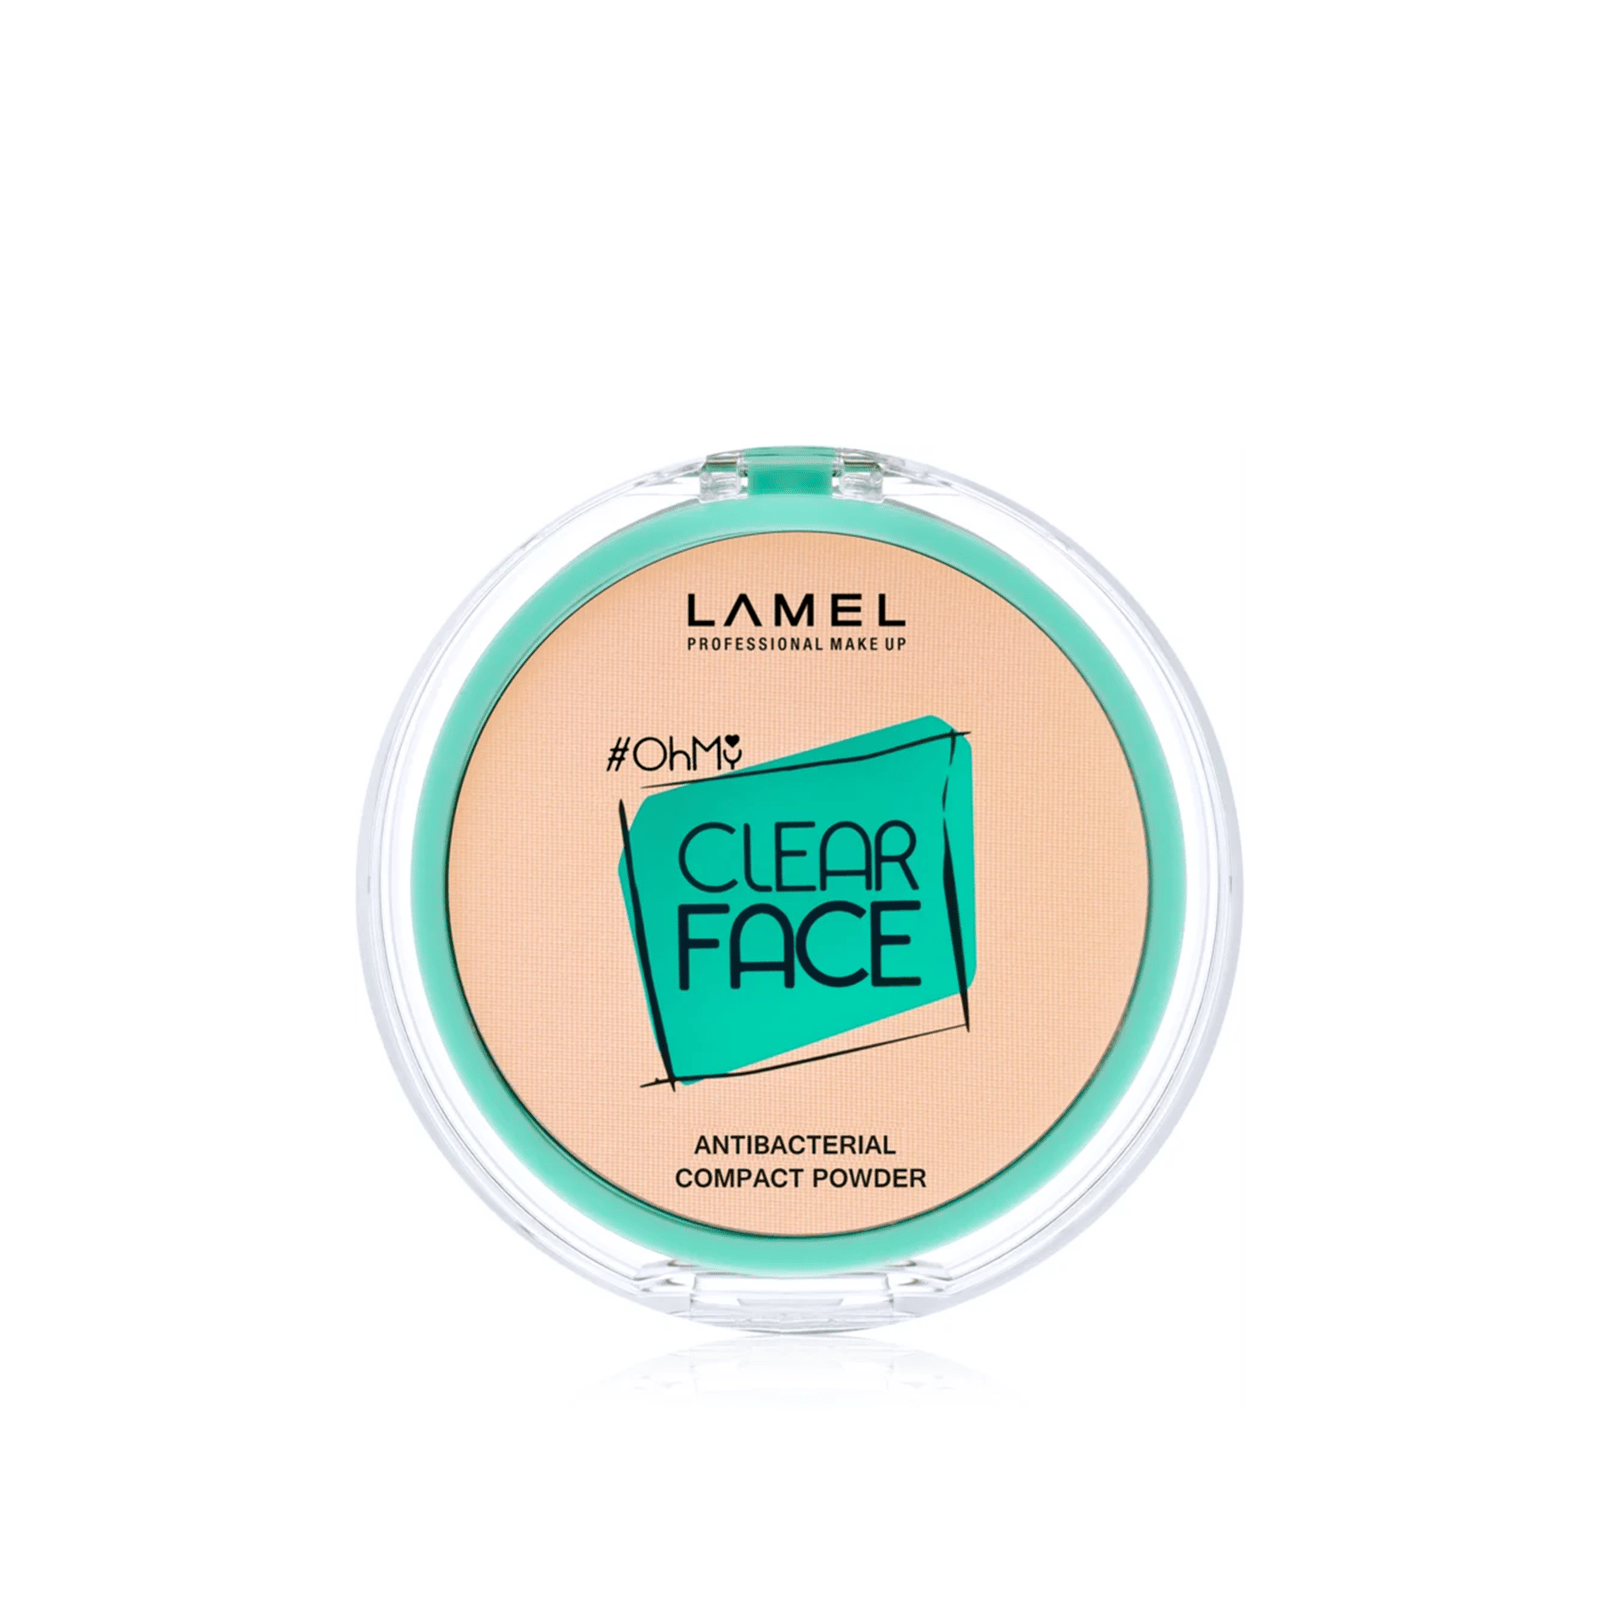 Lamel Oh My Clear Face Compact Powder 402 Vanilla 6g (0.21oz)